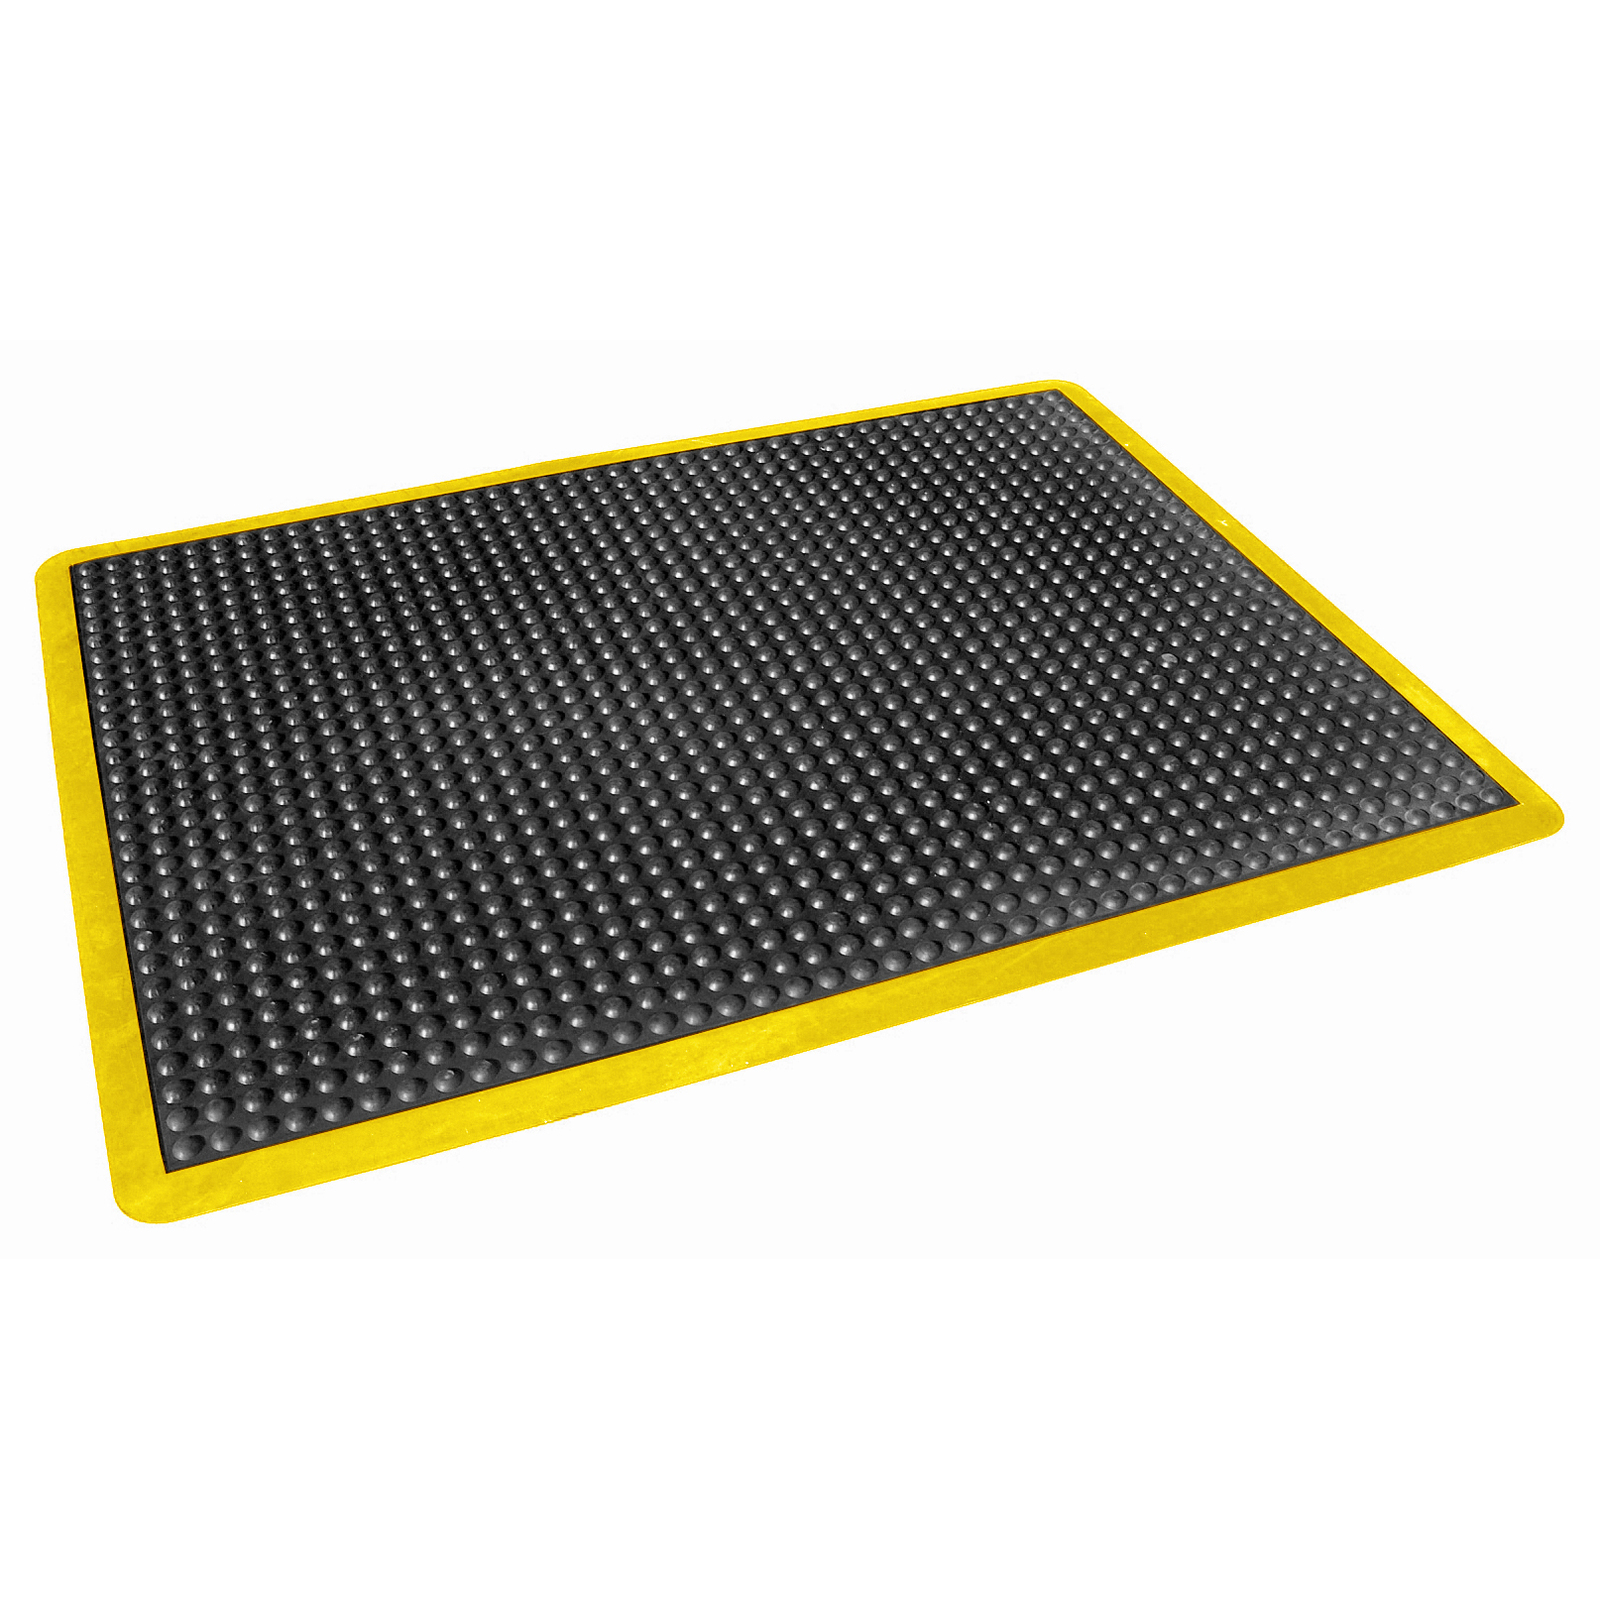 Super Comfort Safety Anti Fatigue Floor Mat - Heavy Duty - 600 x 900mm - Yellow Border